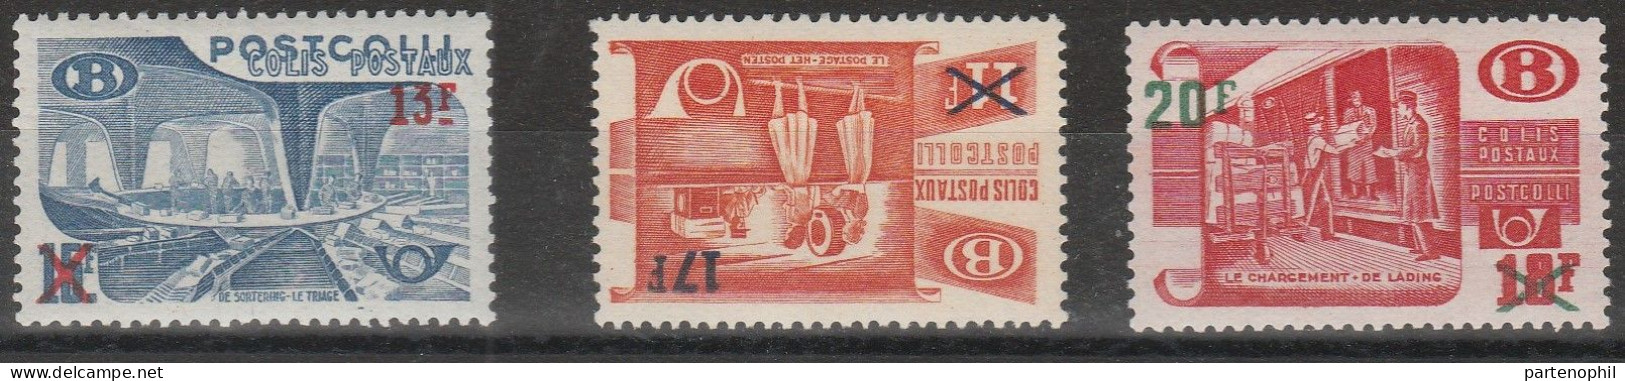 449 Belgio Belgium 1953 - Pacchi Postali - Smistamento Postale N. 331/33. Cat. € 105,00MNH - Ungebraucht